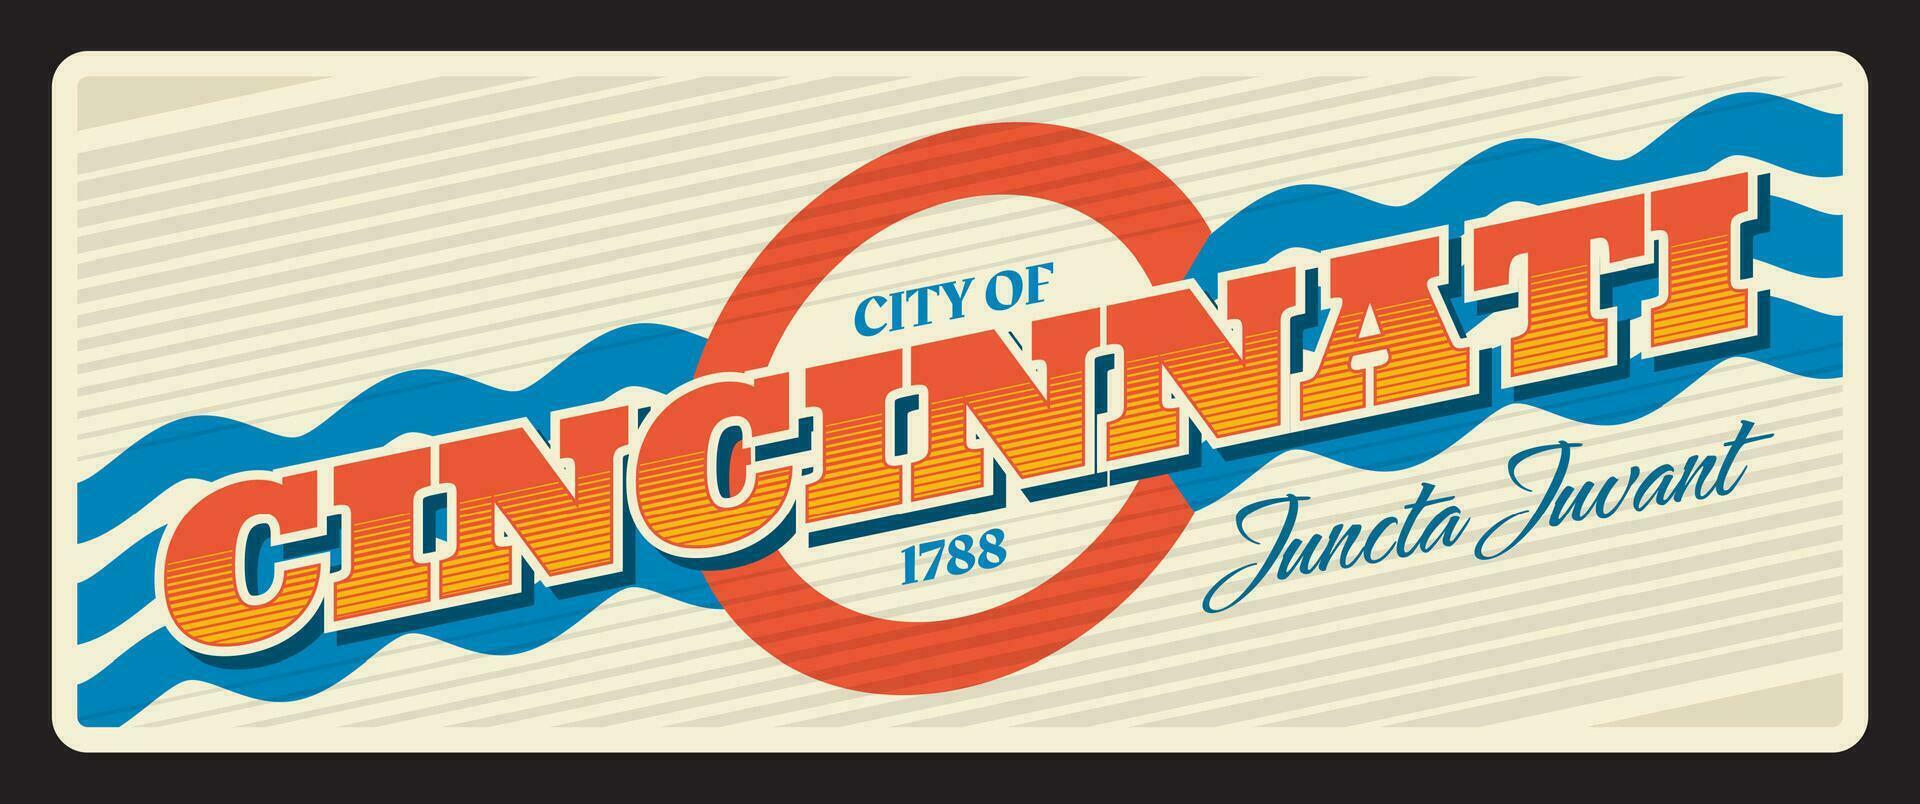 Cincinnati american city retro travel plate sign vector